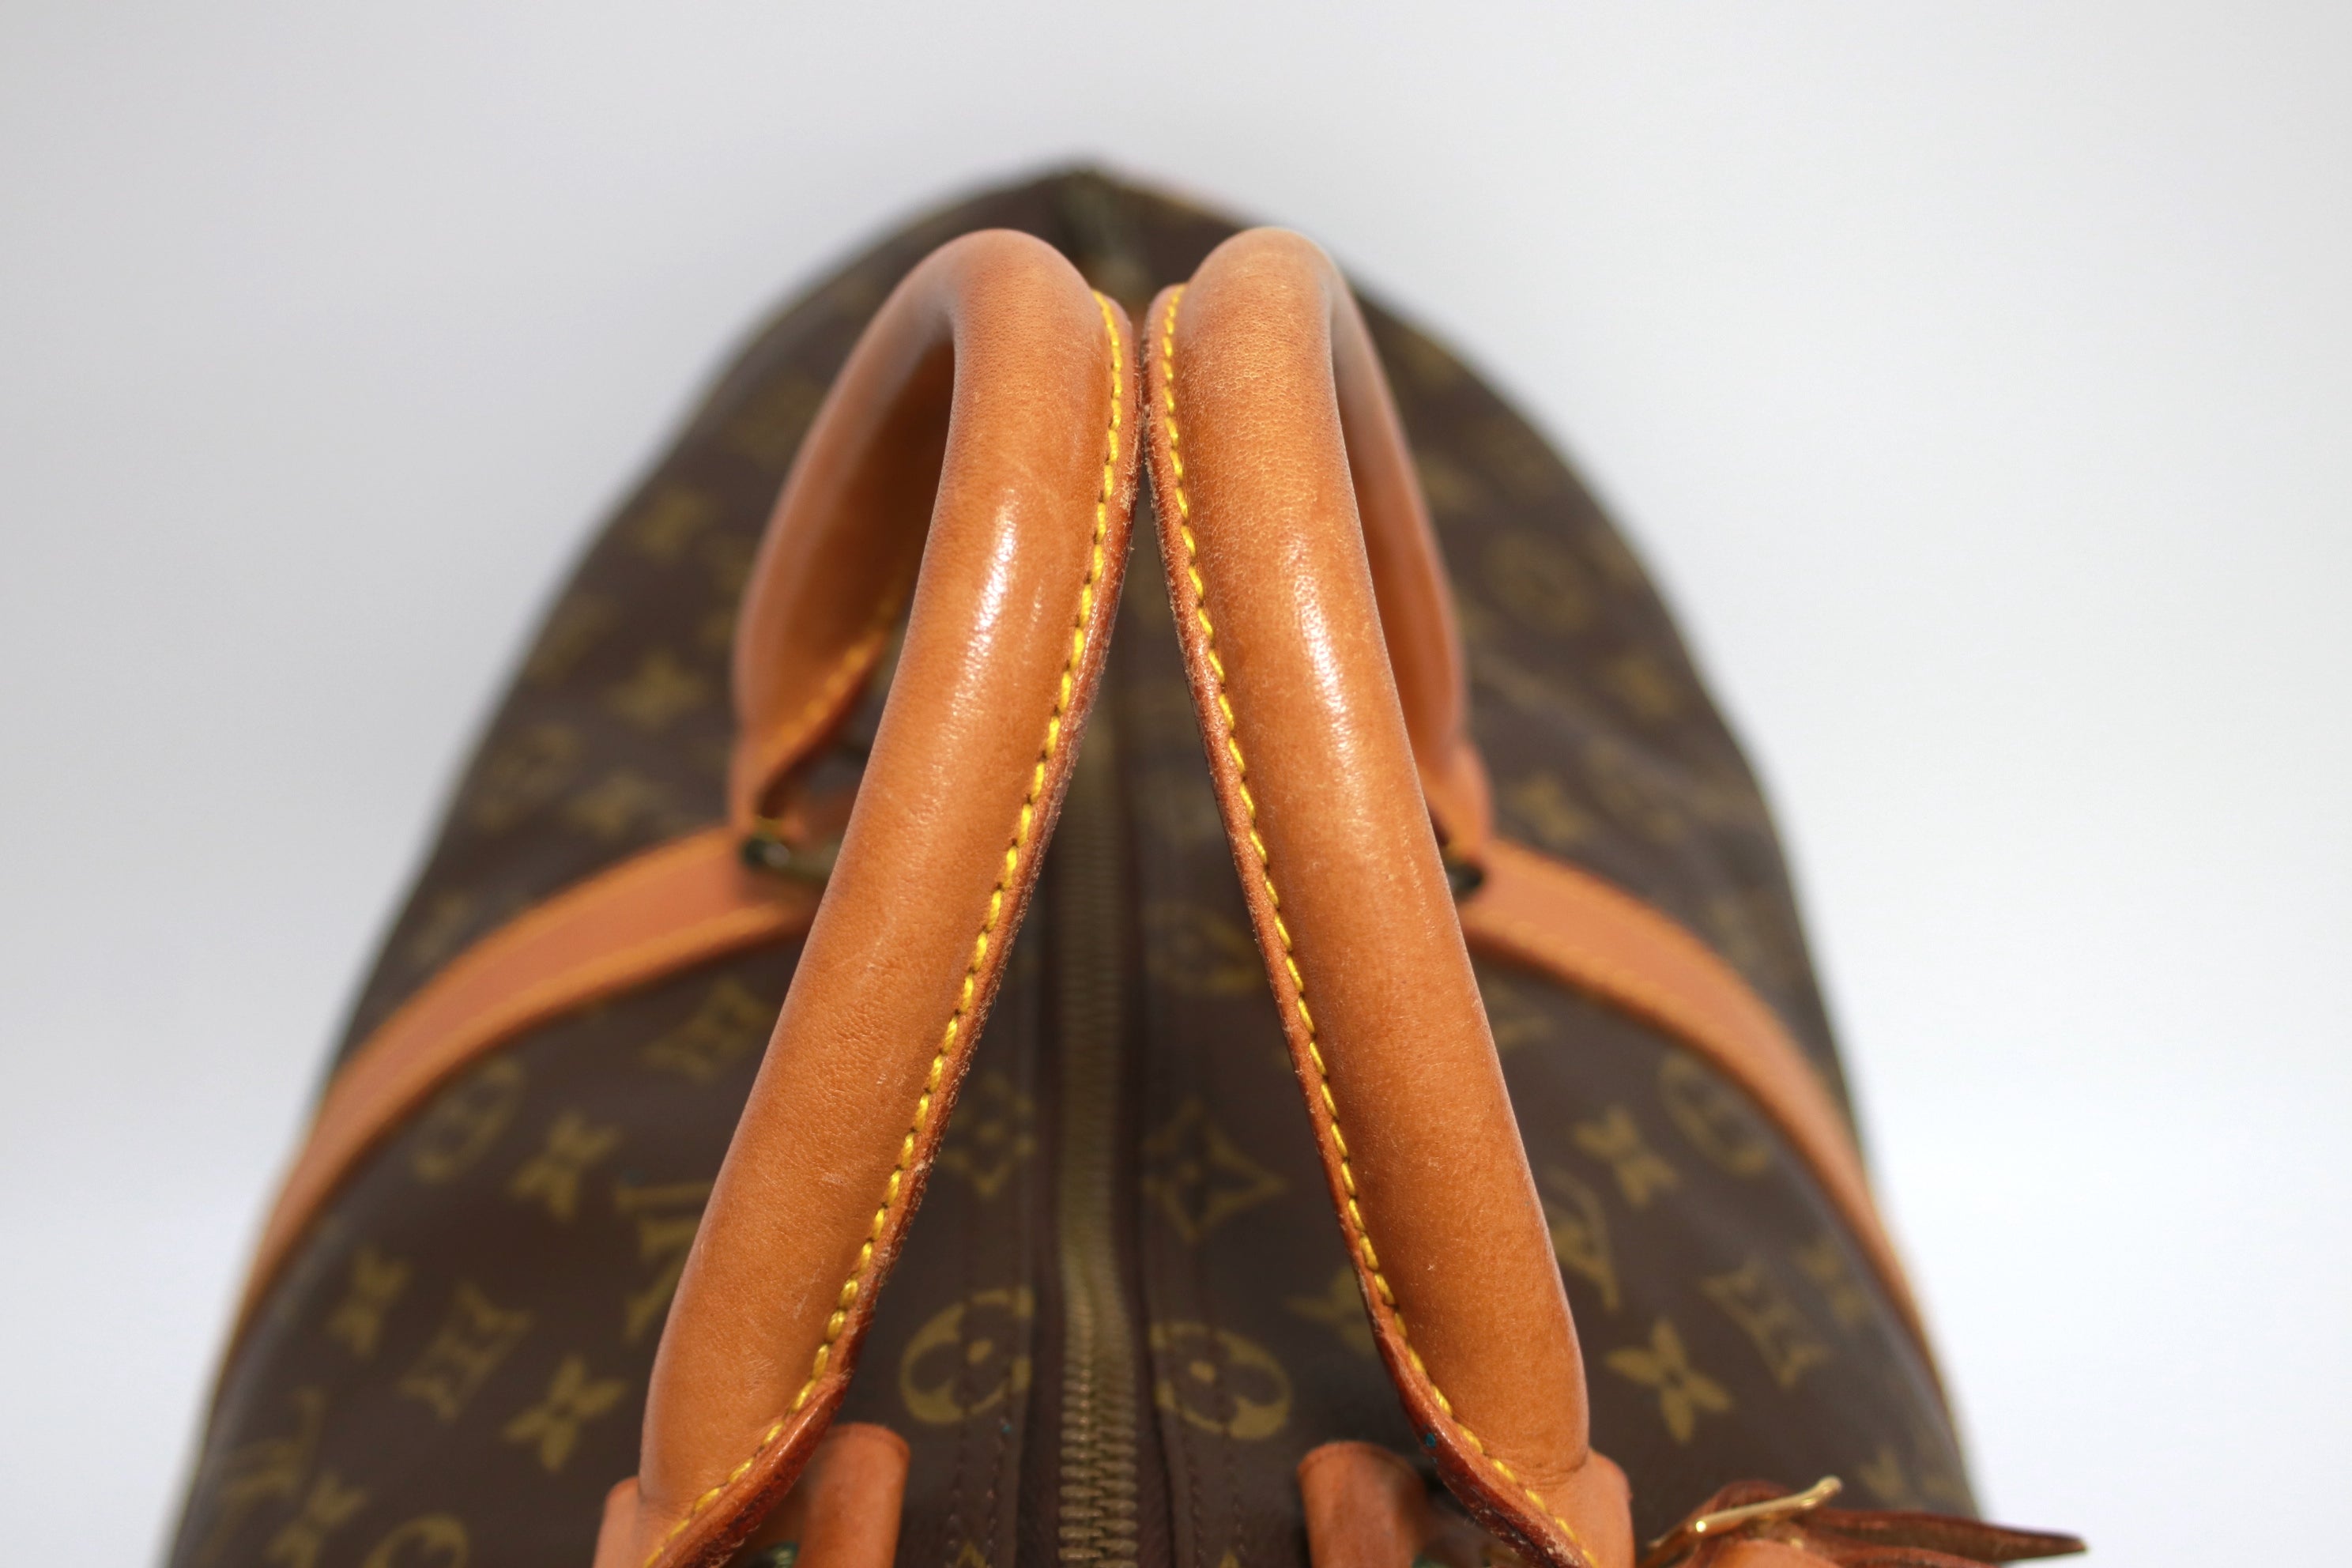 Louis Vuitton Keepall 55 Duffle Bag Used (7531)